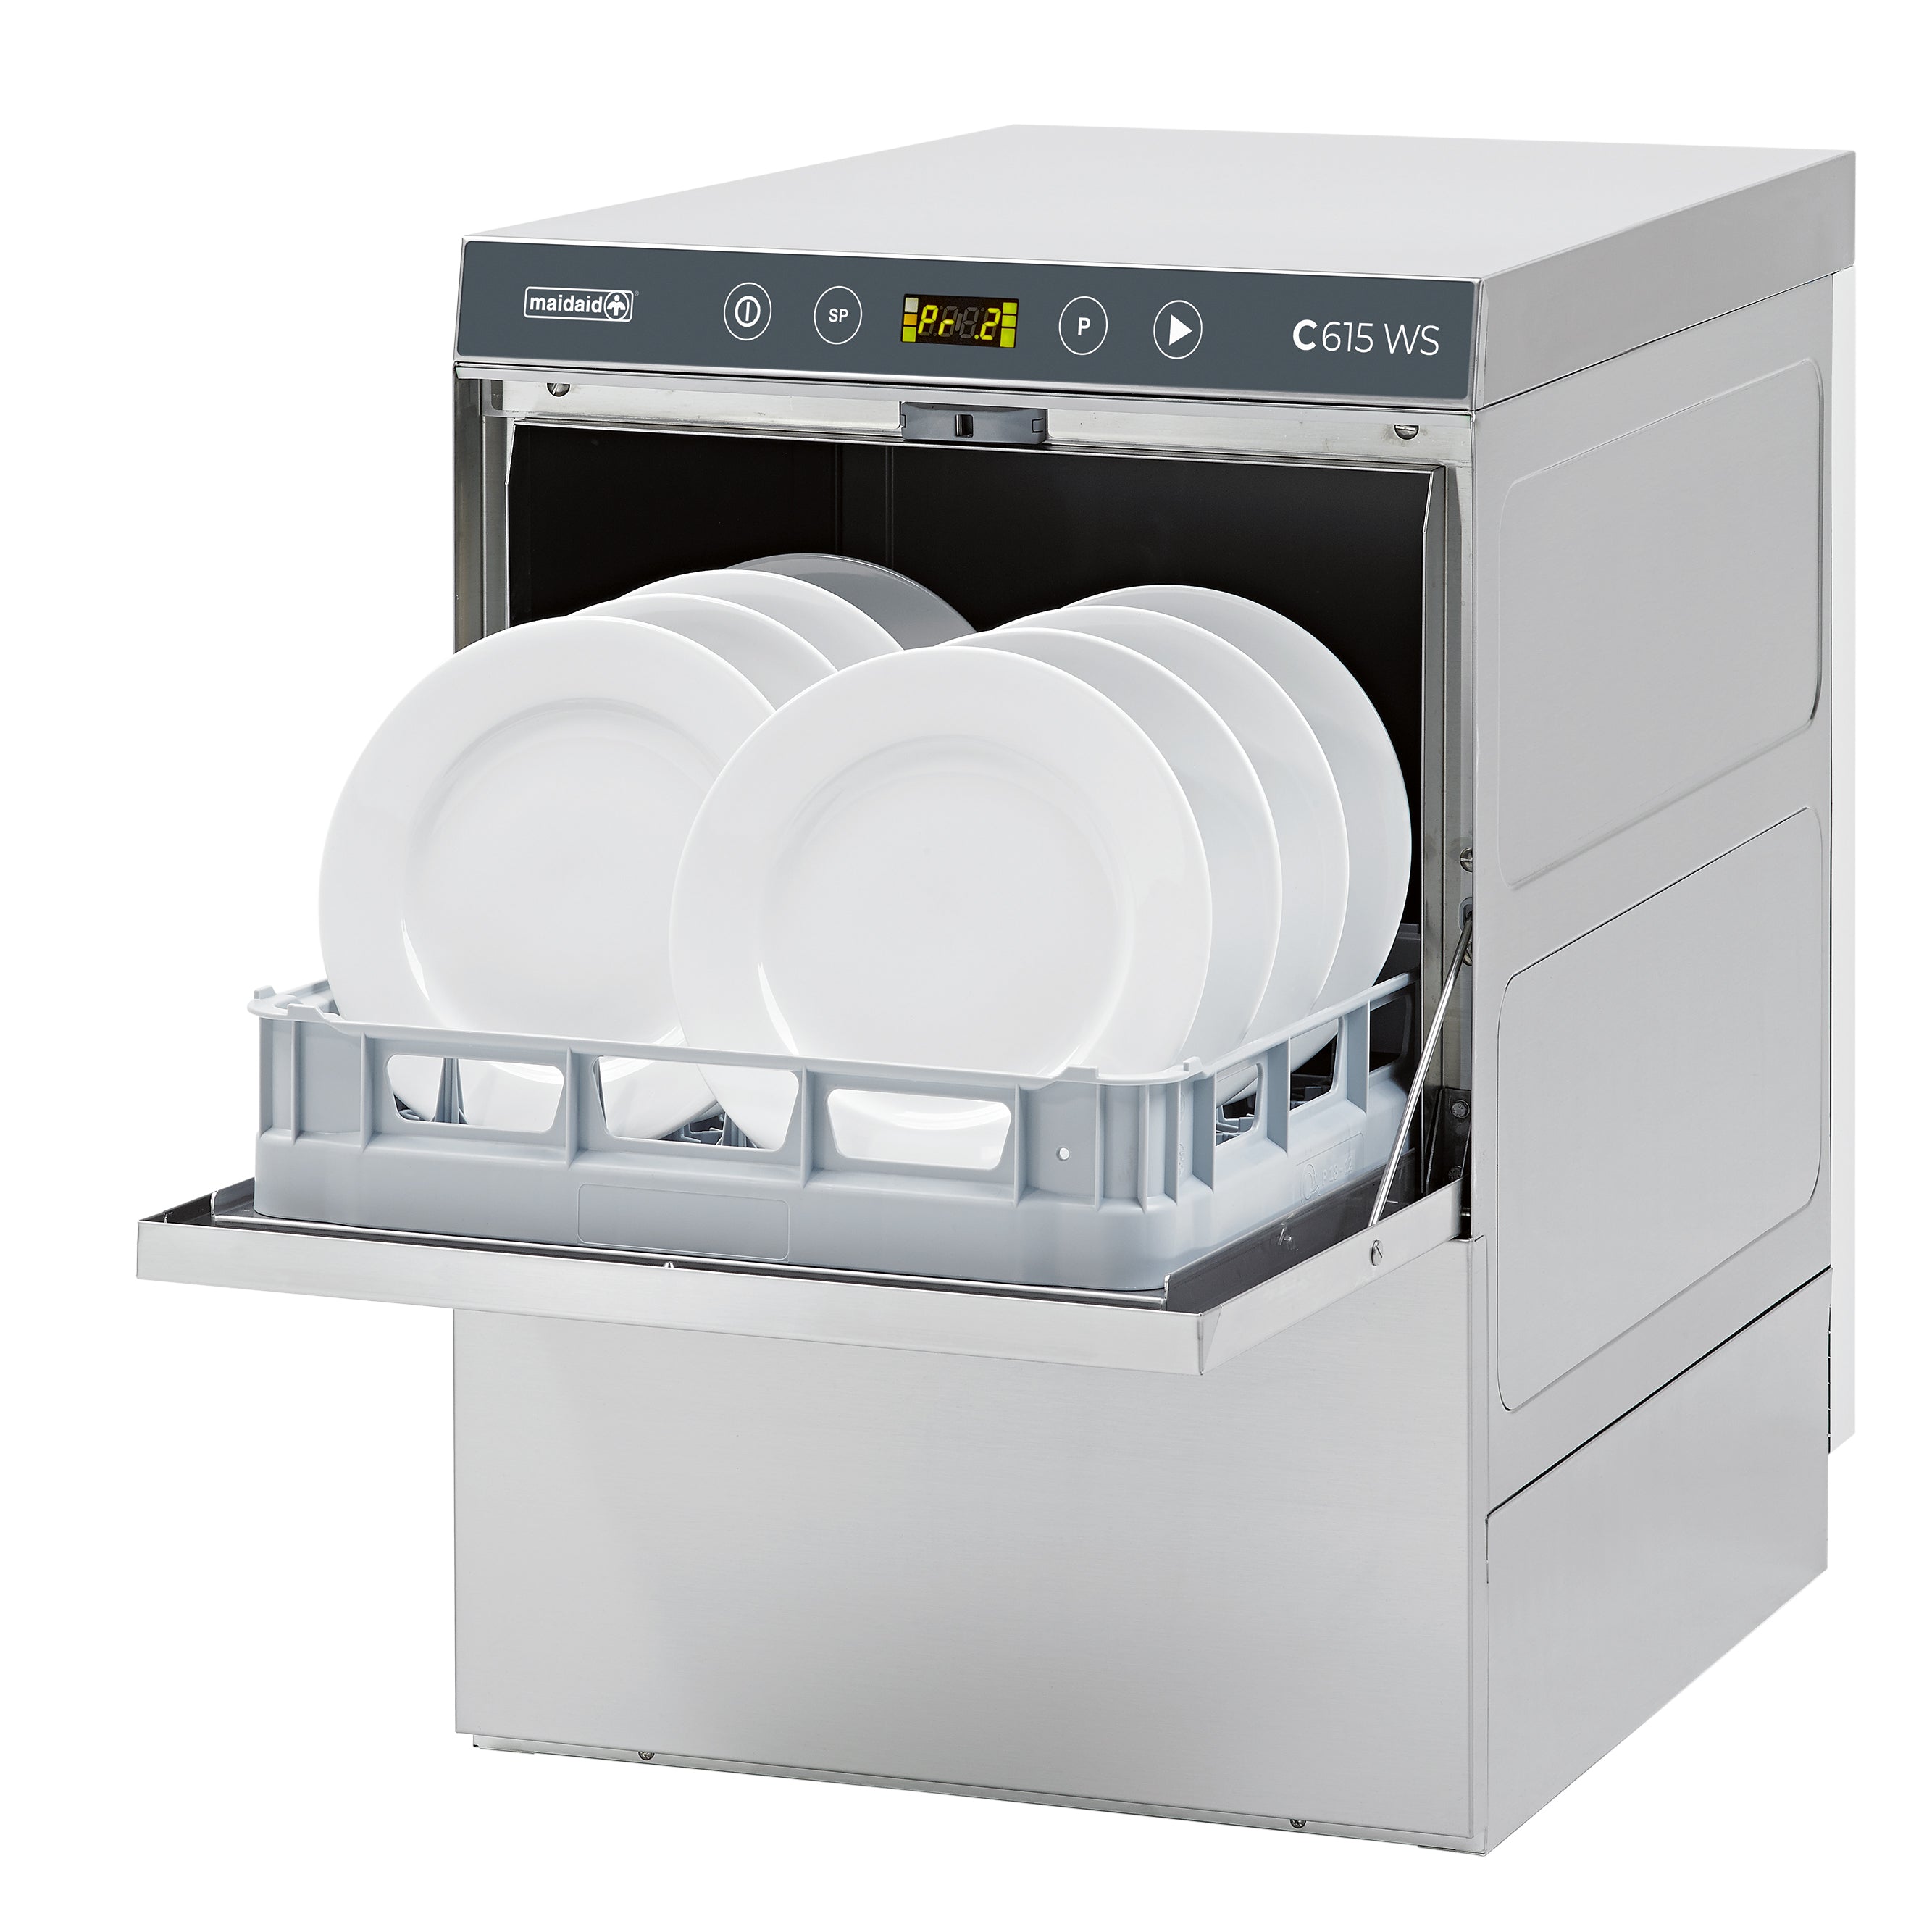 Maidaid C615WS Dishwasher JD Catering Equipment Solutions Ltd